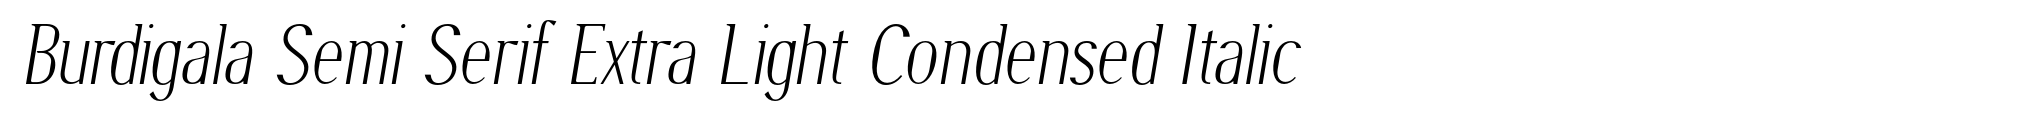 Burdigala Semi Serif Extra Light Condensed Italic image